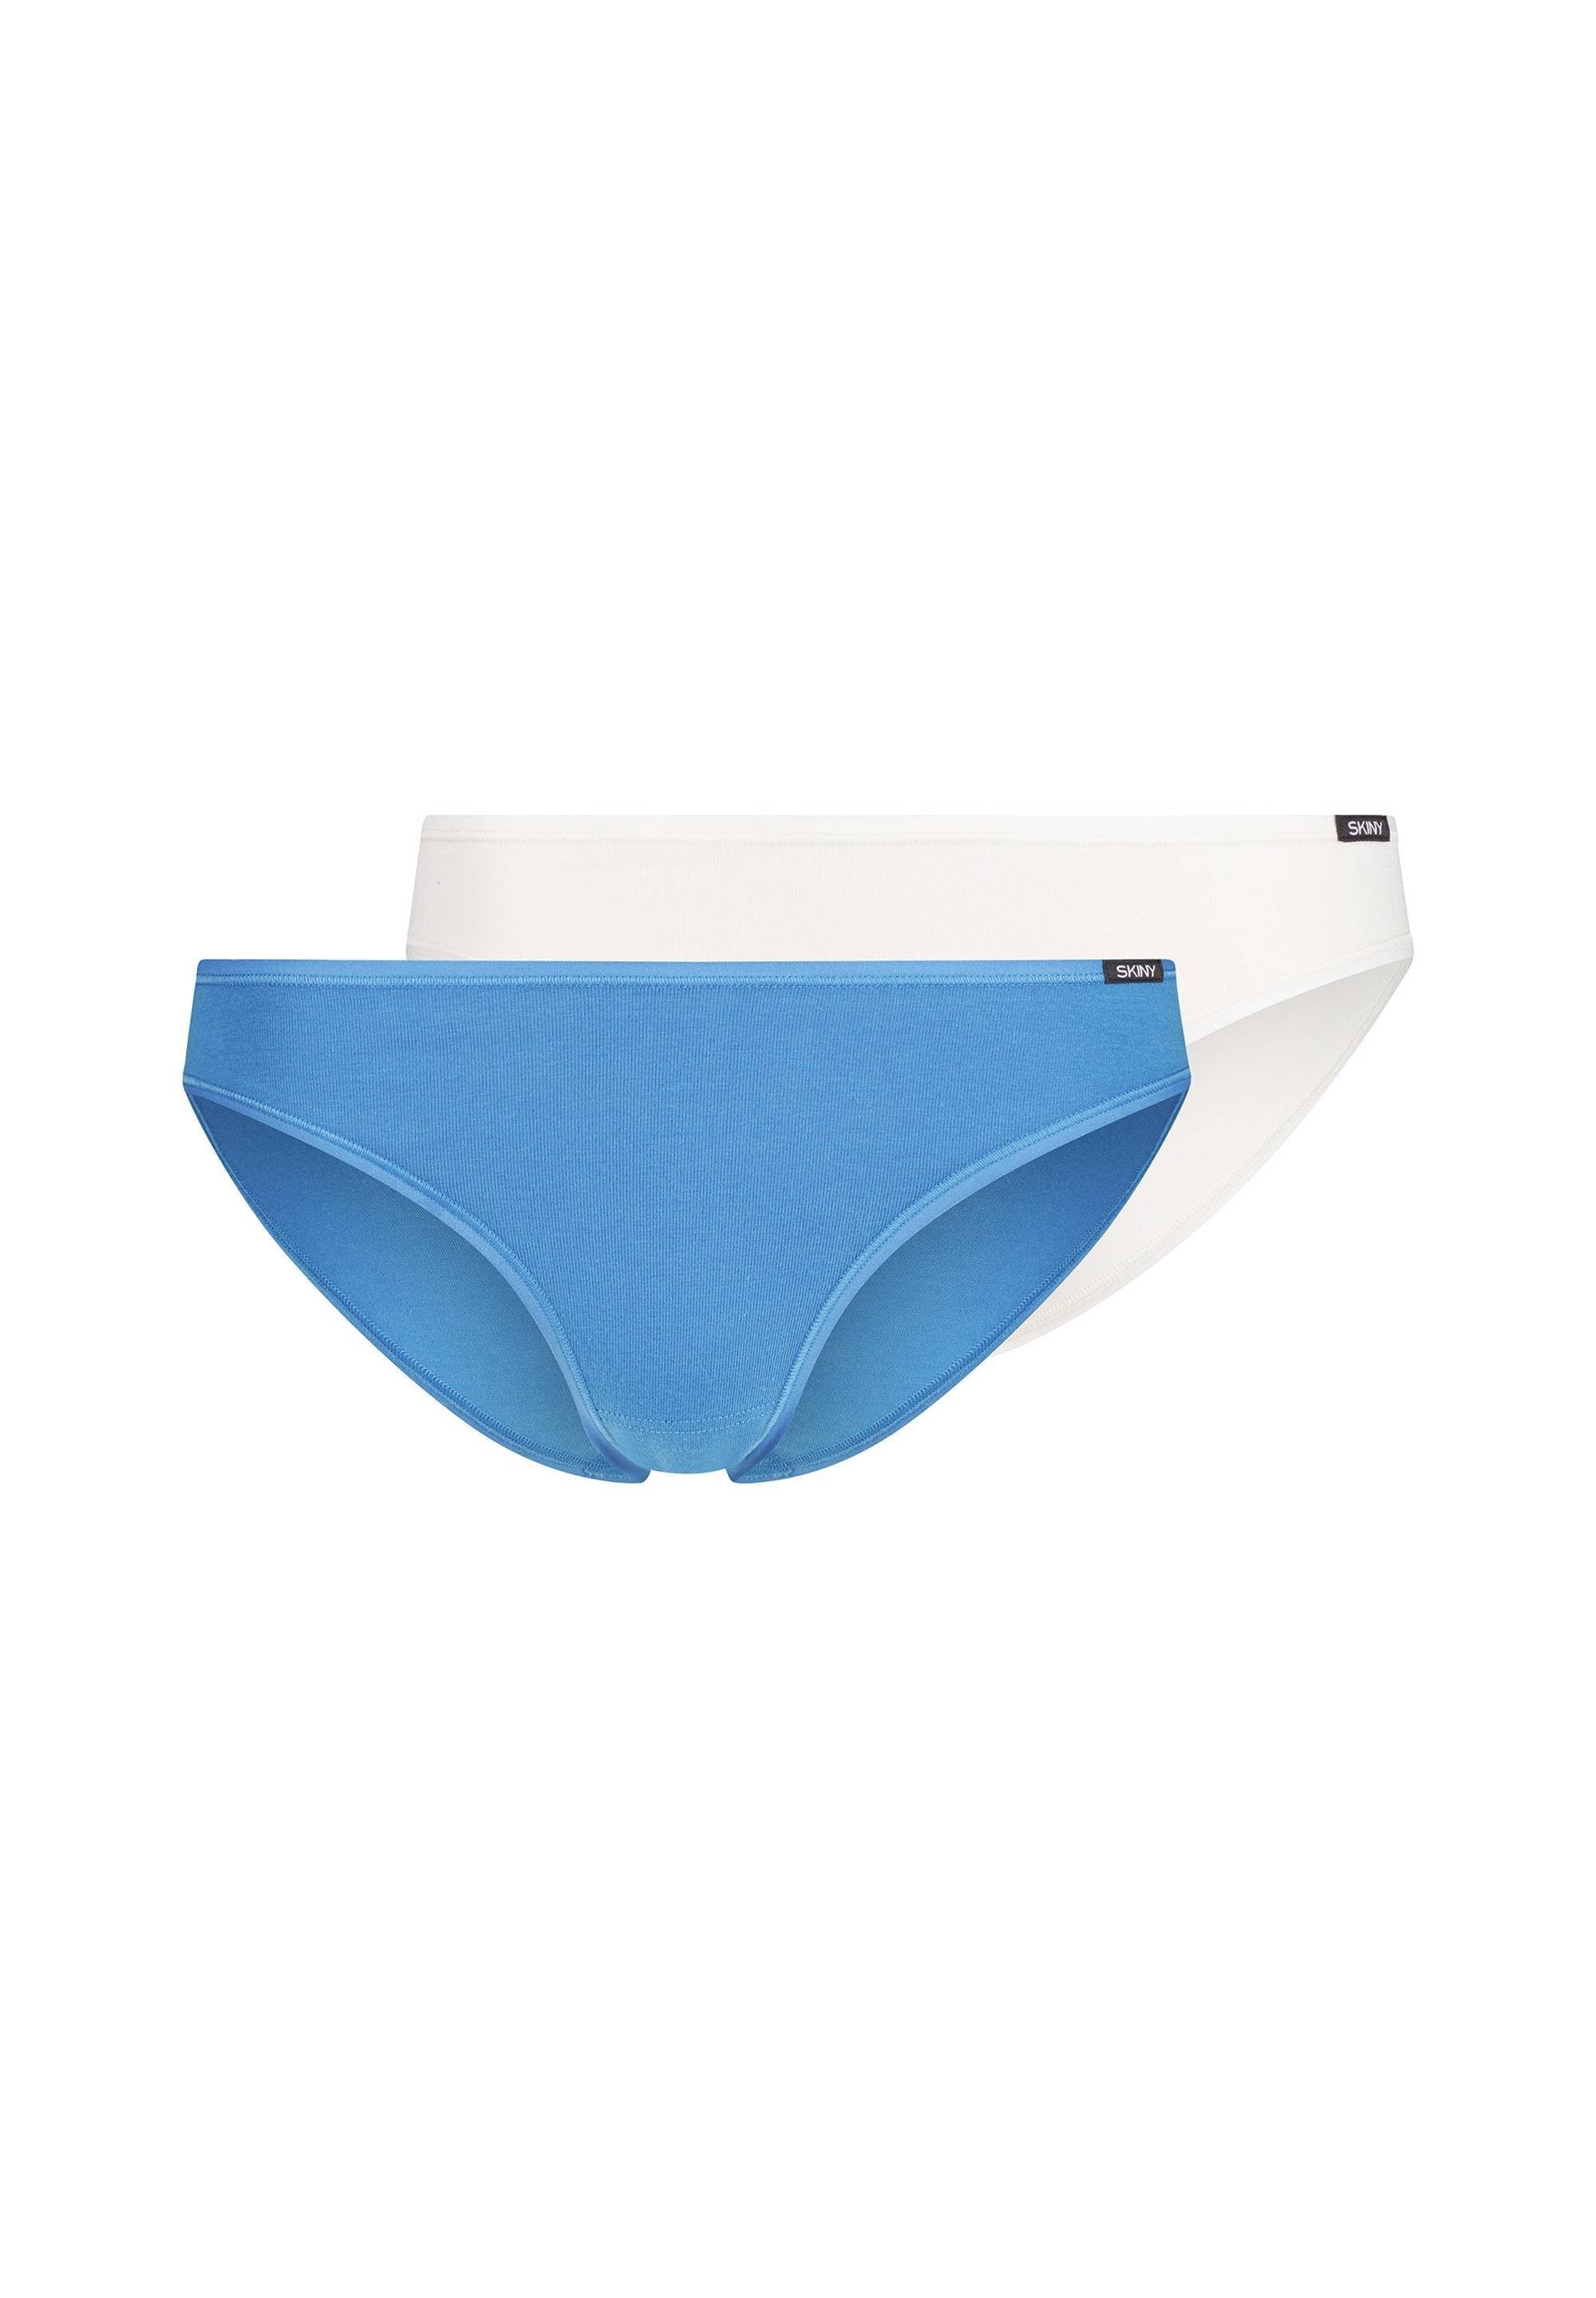 Rio Pack Skiny - Damen Slip, 2er Slip Cotton Hellblau/Weiß Slip, Bikini